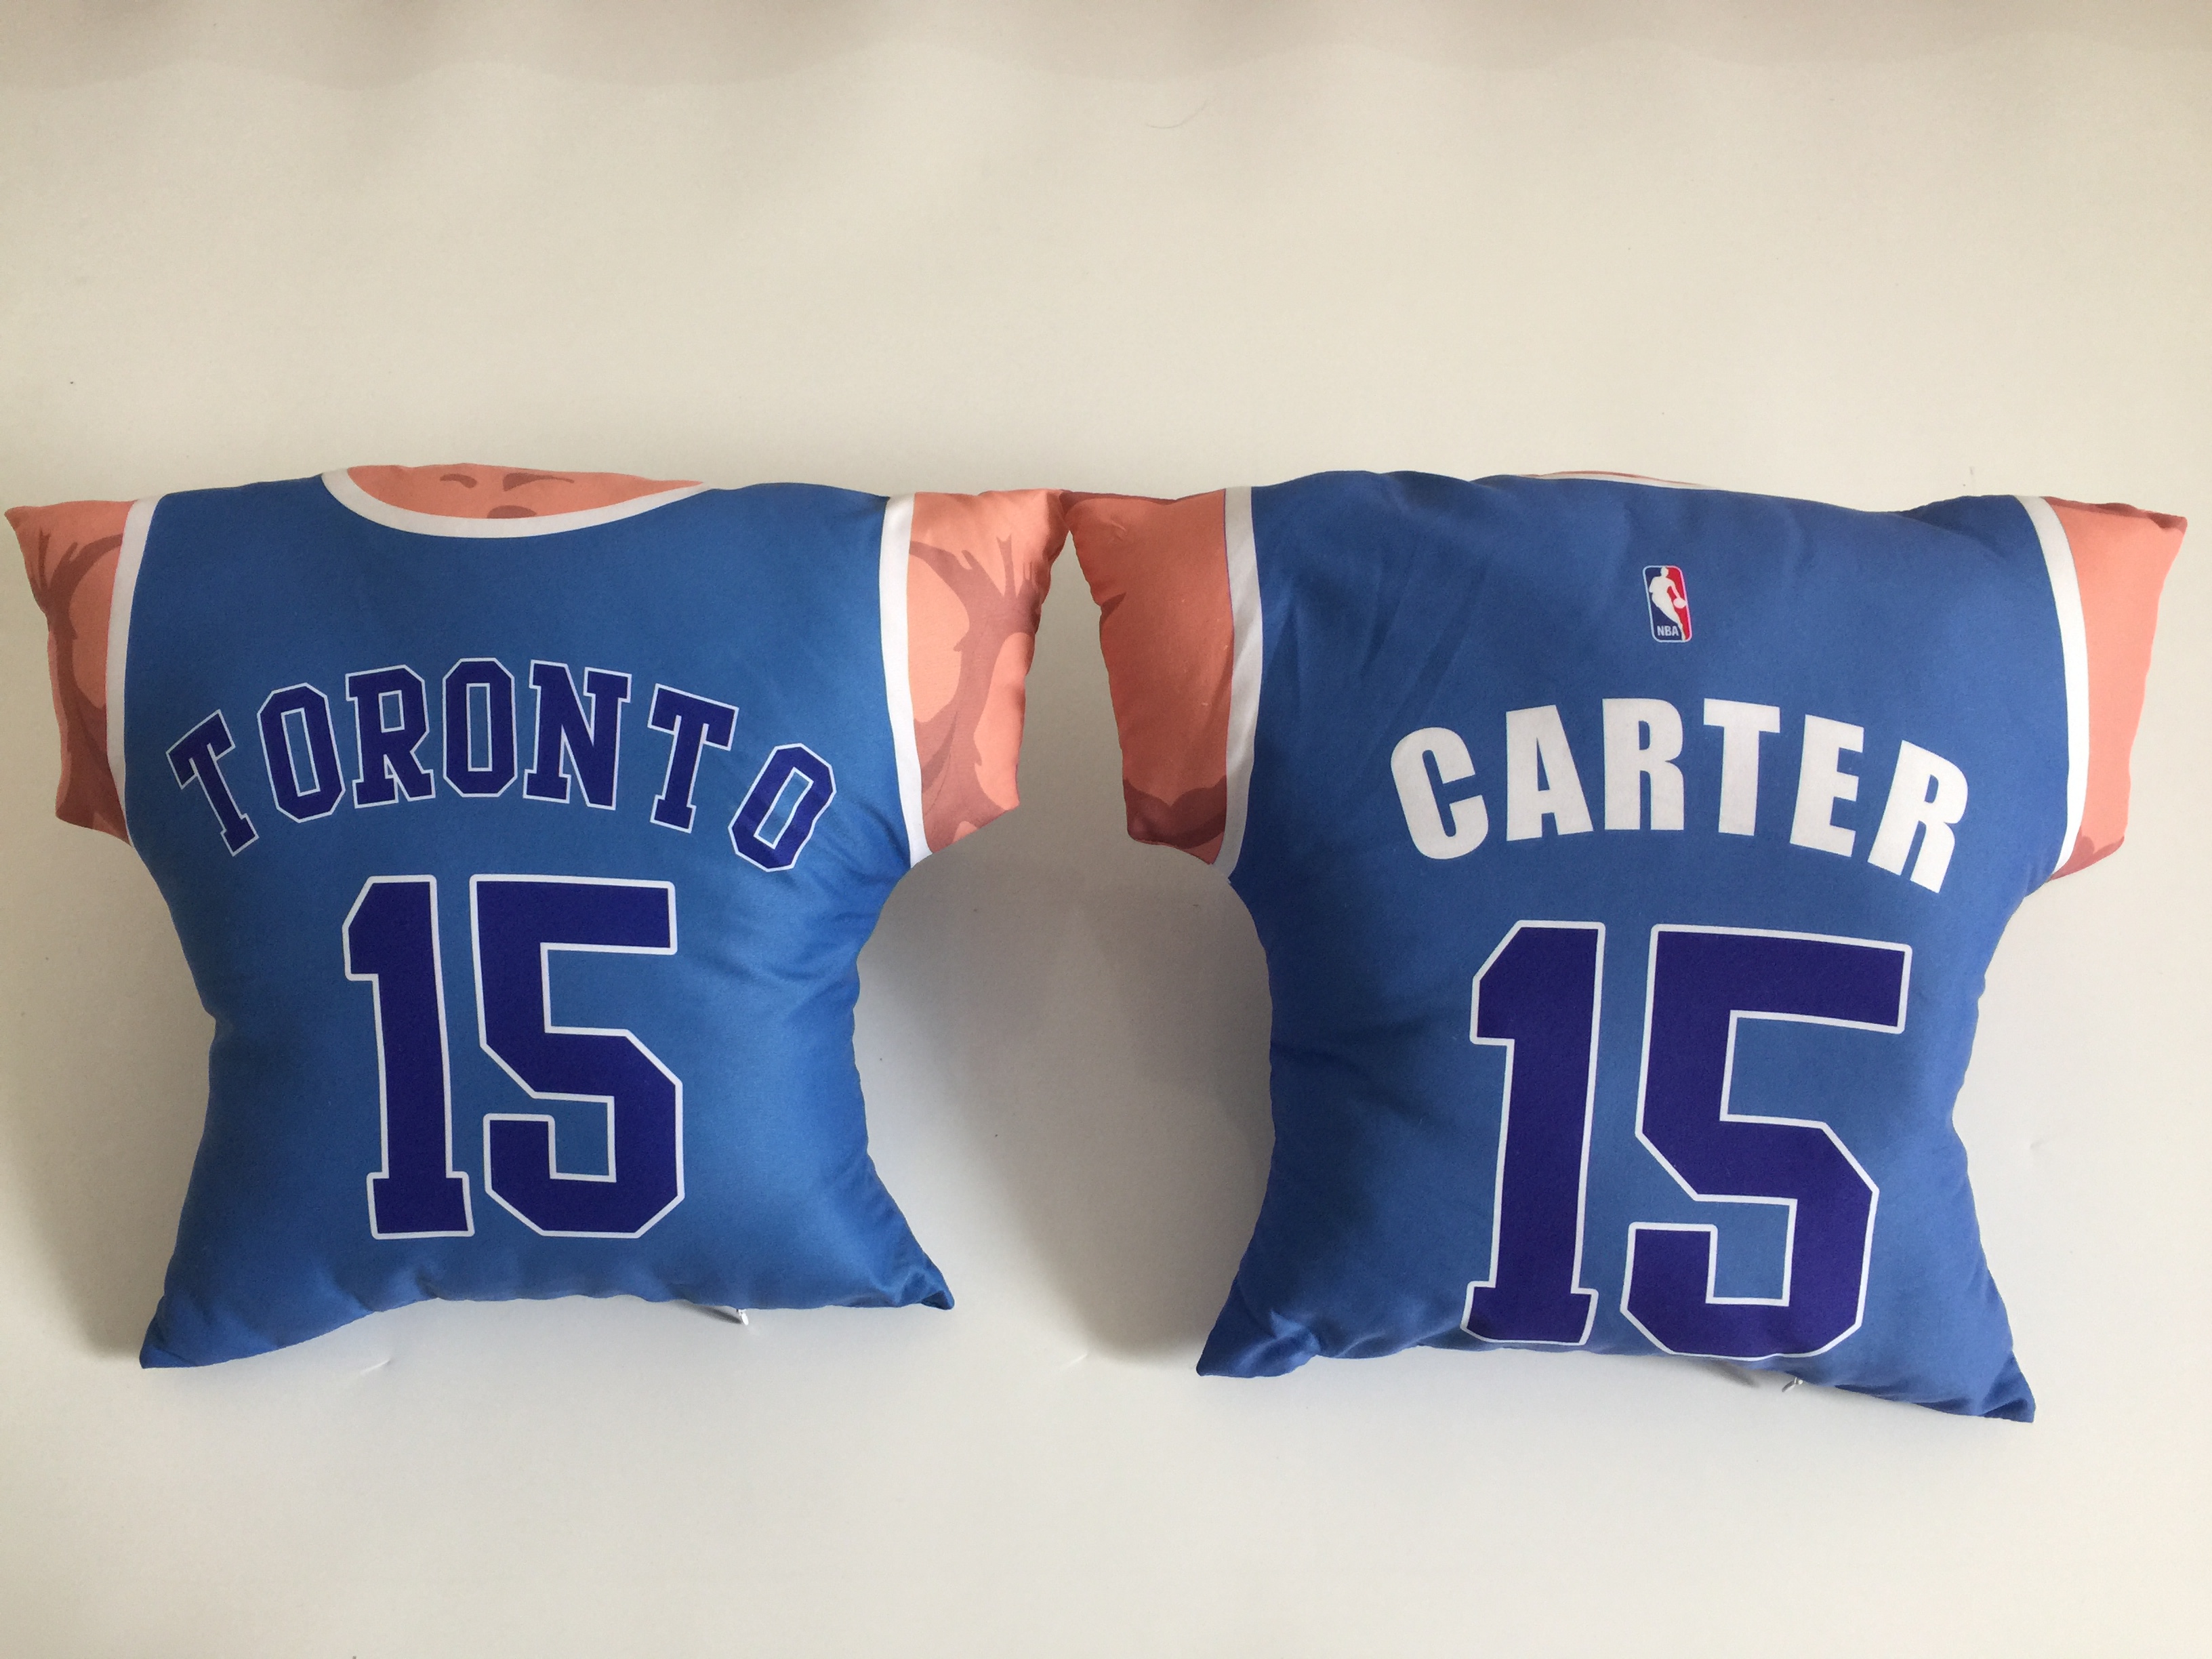 Toronto Raptors 15 Vince Carter Blue NBA Pillow